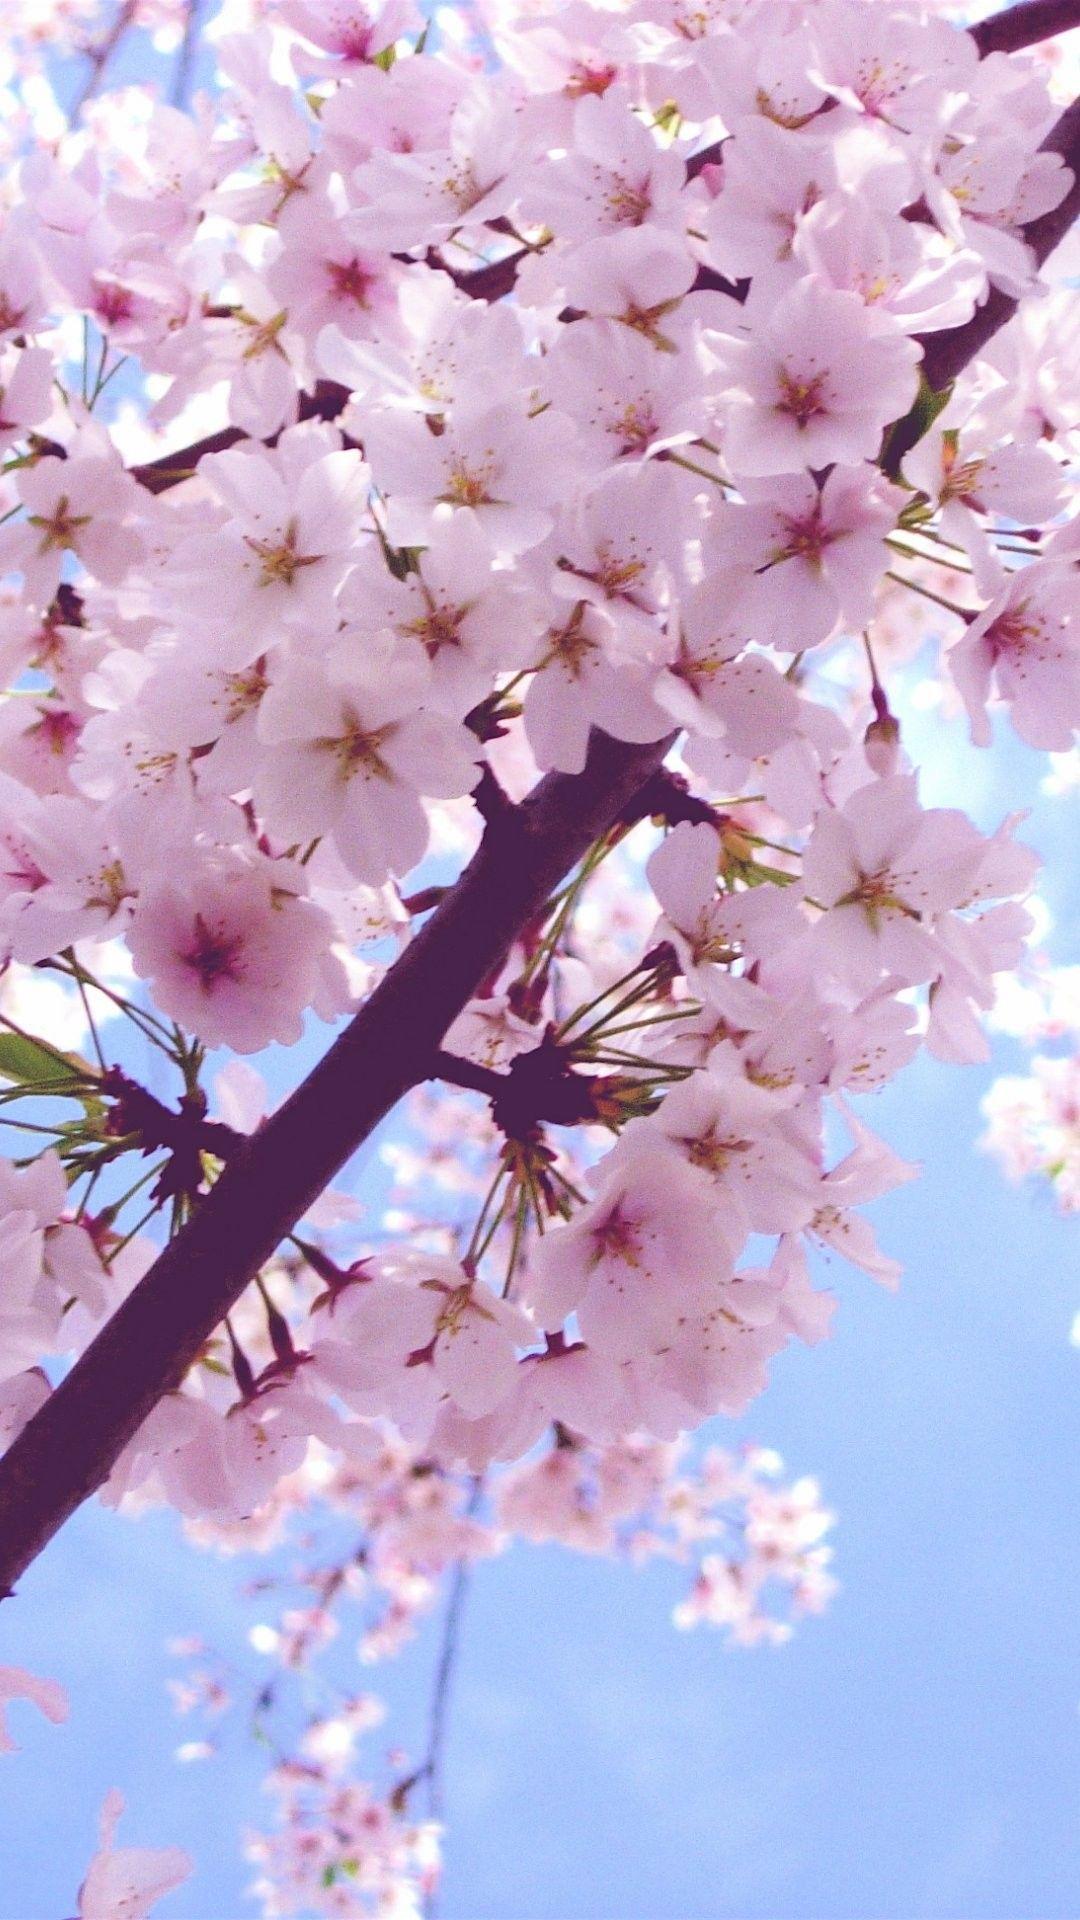 cherry blossom iphone wallpaper